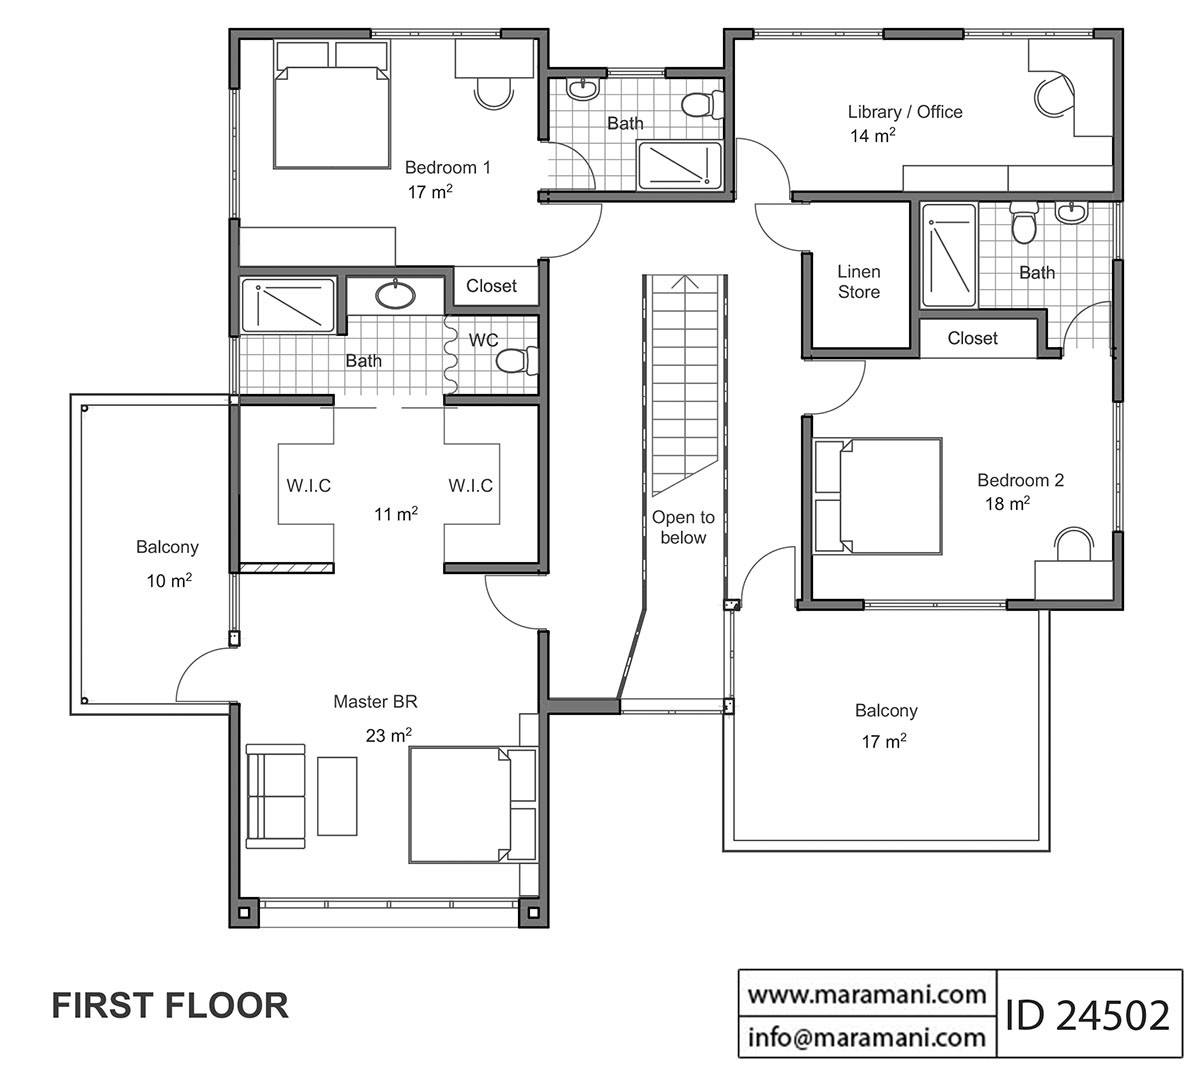 4 Bedroom Modern House Plan - ID 24502